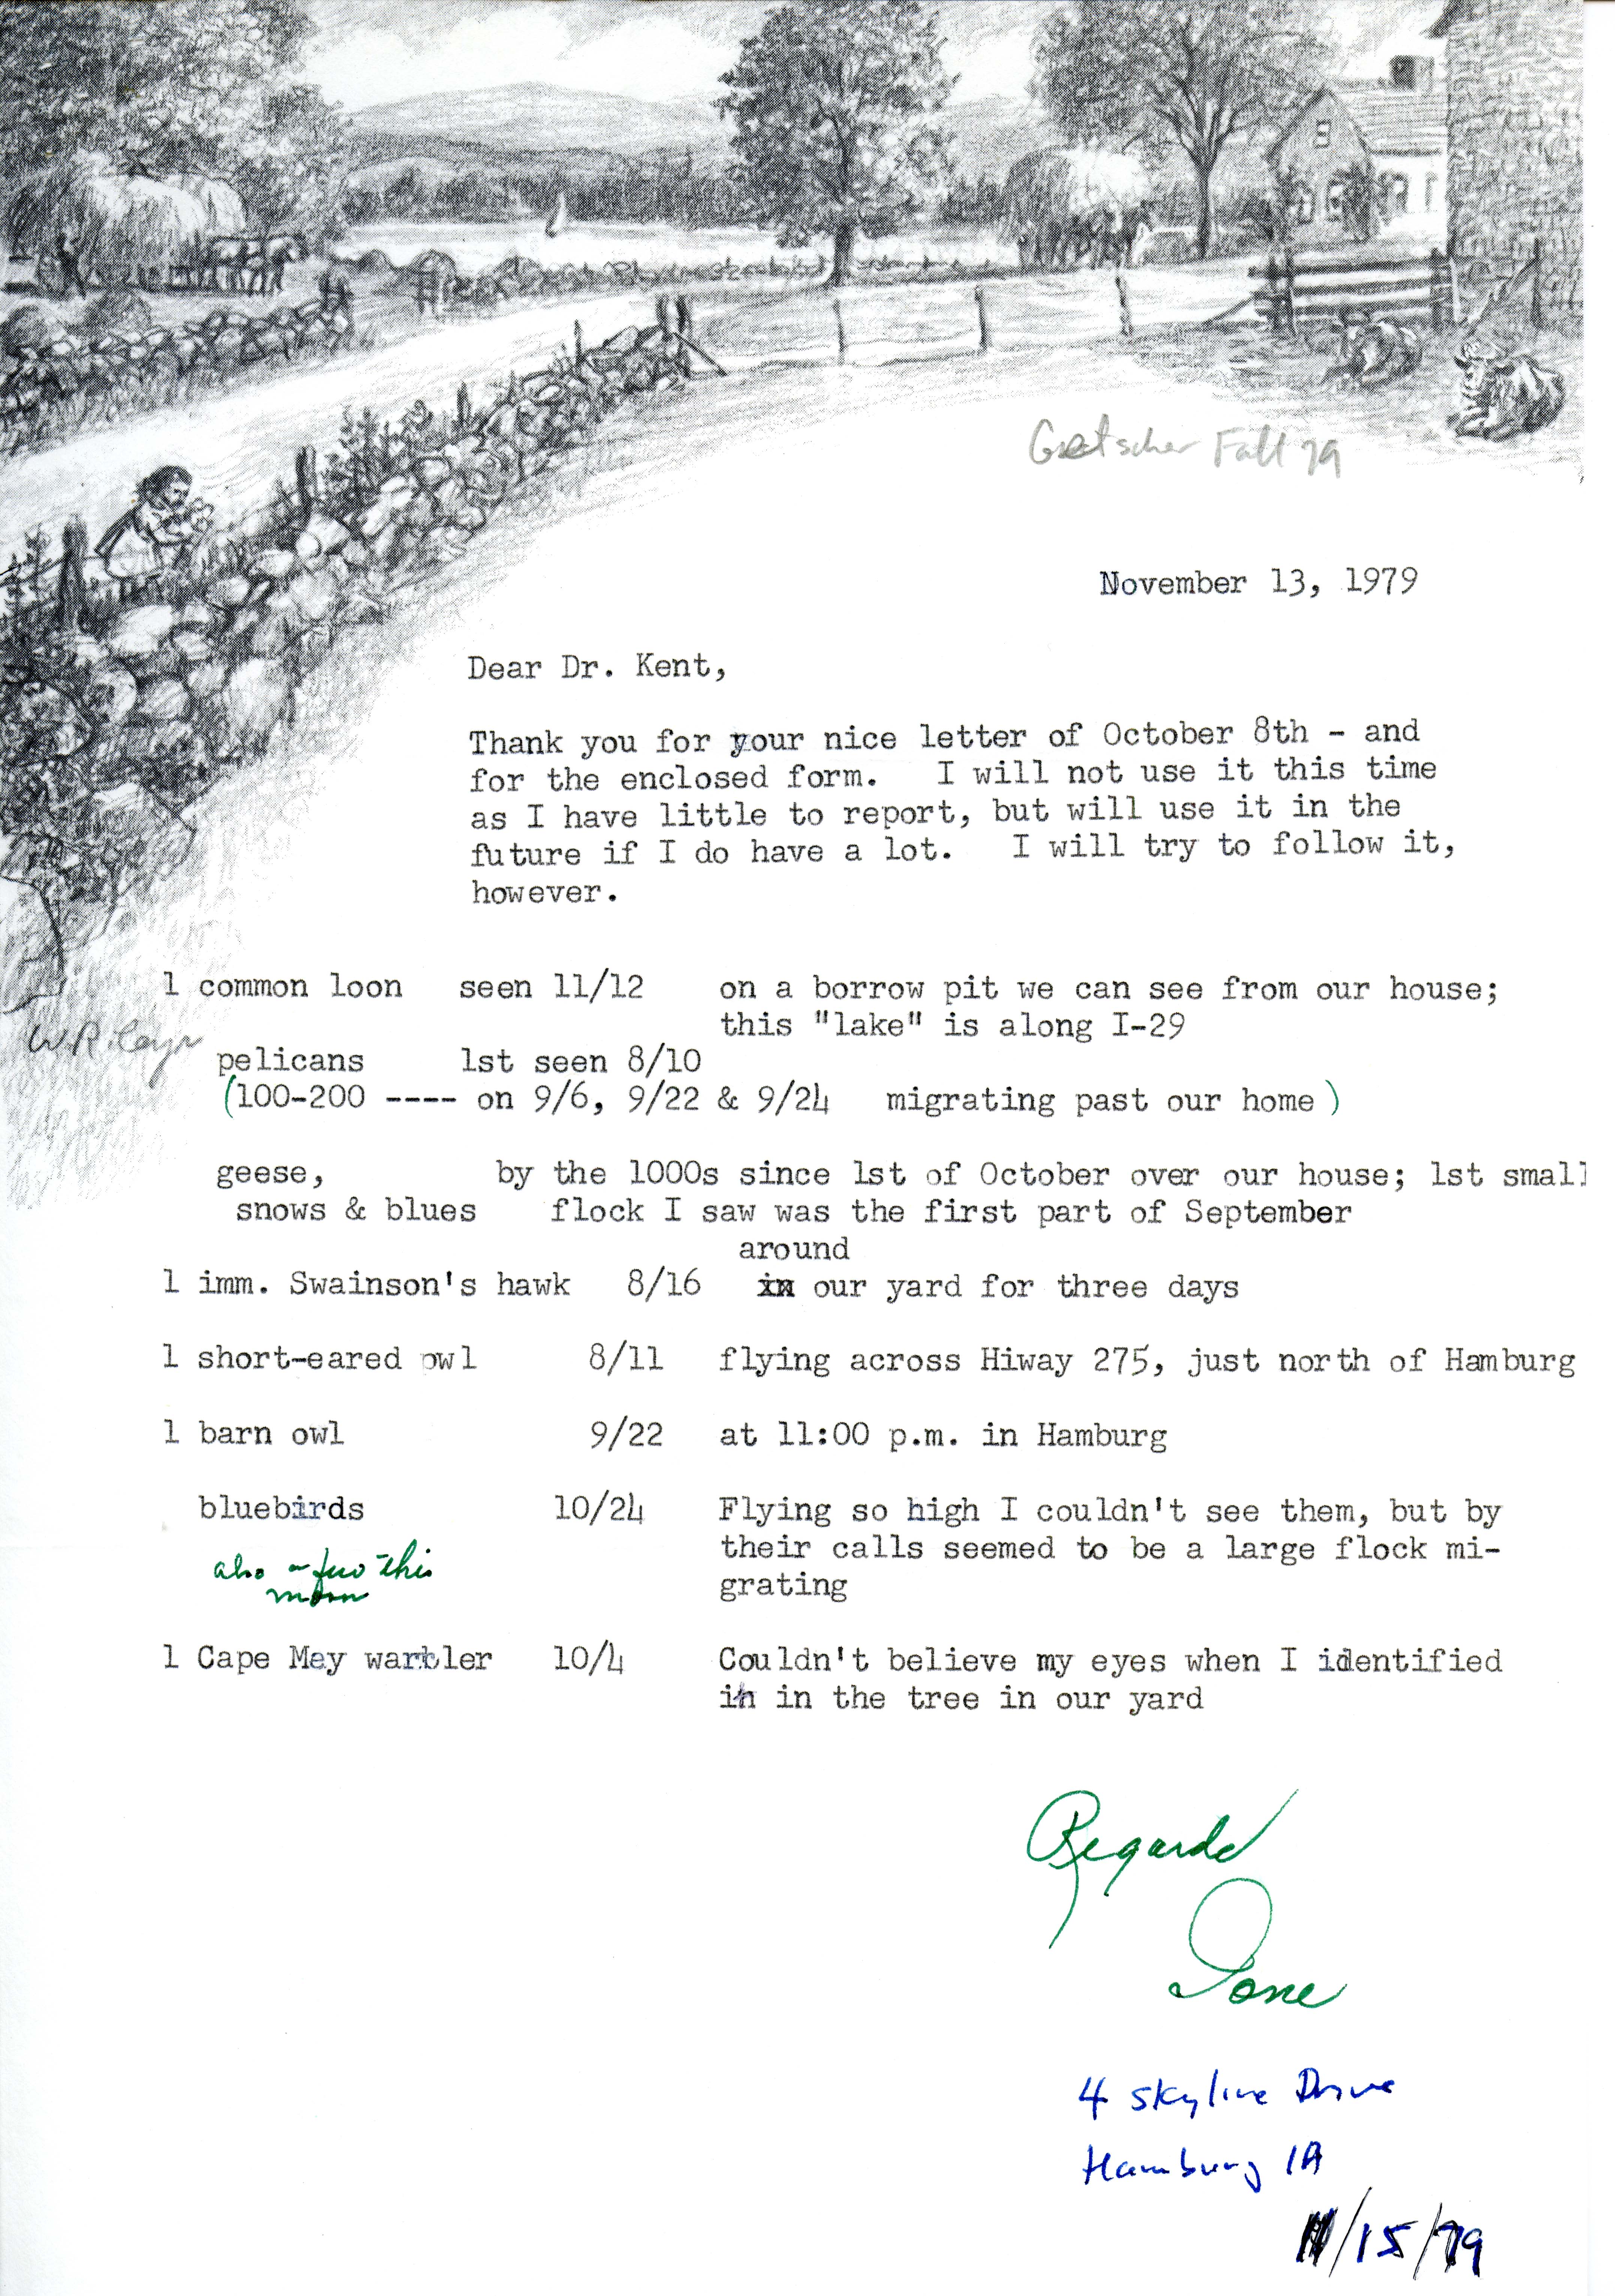 Ione Getscher letter to Thomas H. Kent regarding bird sightings, November 13, 1979